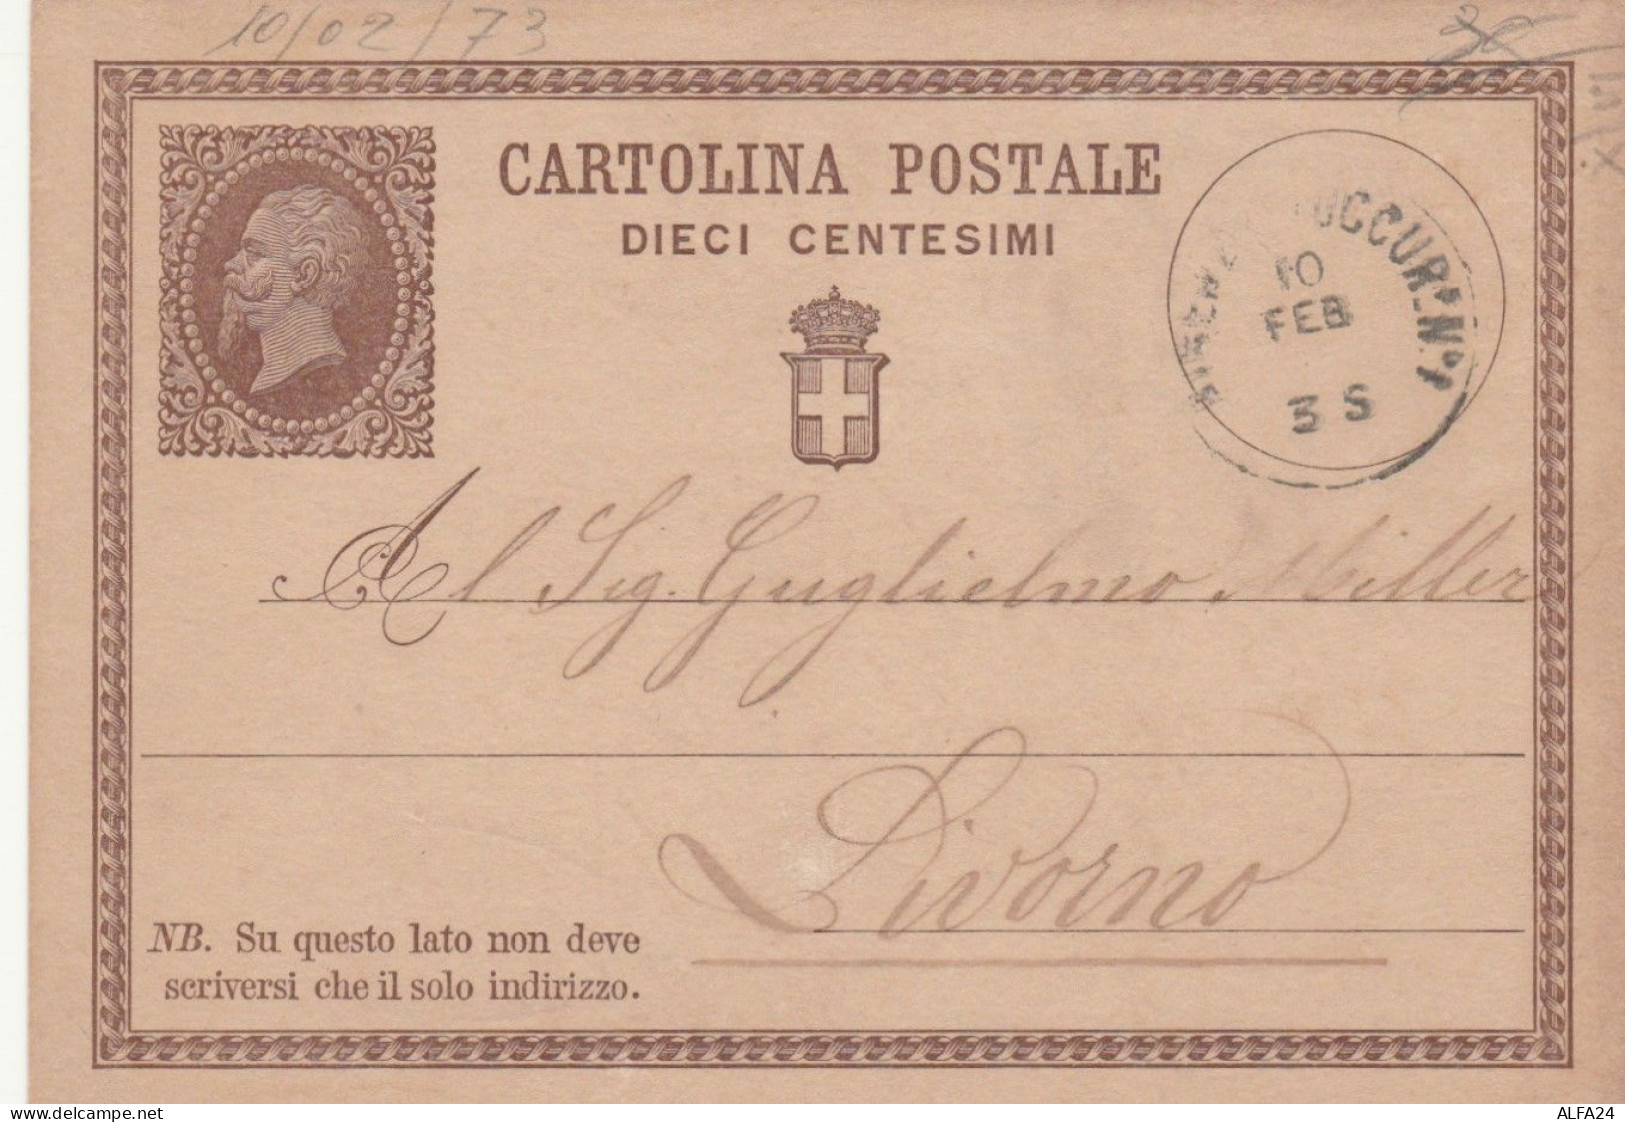 INTERO POSTALE 10 CENT 1873-CAT.LASER 1 (HC1 - Entero Postal